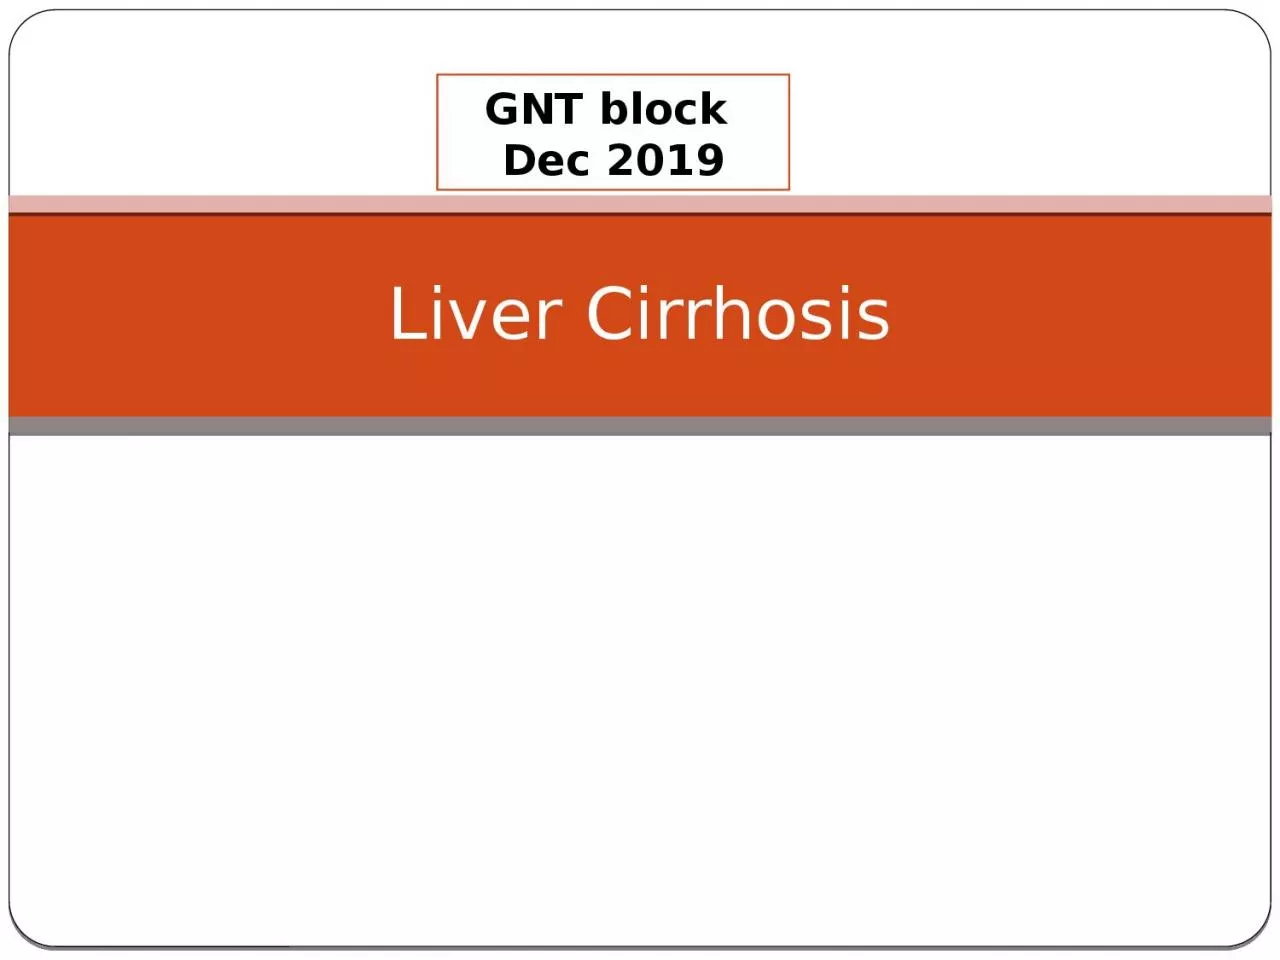 Liver Cirrhosis GNT block